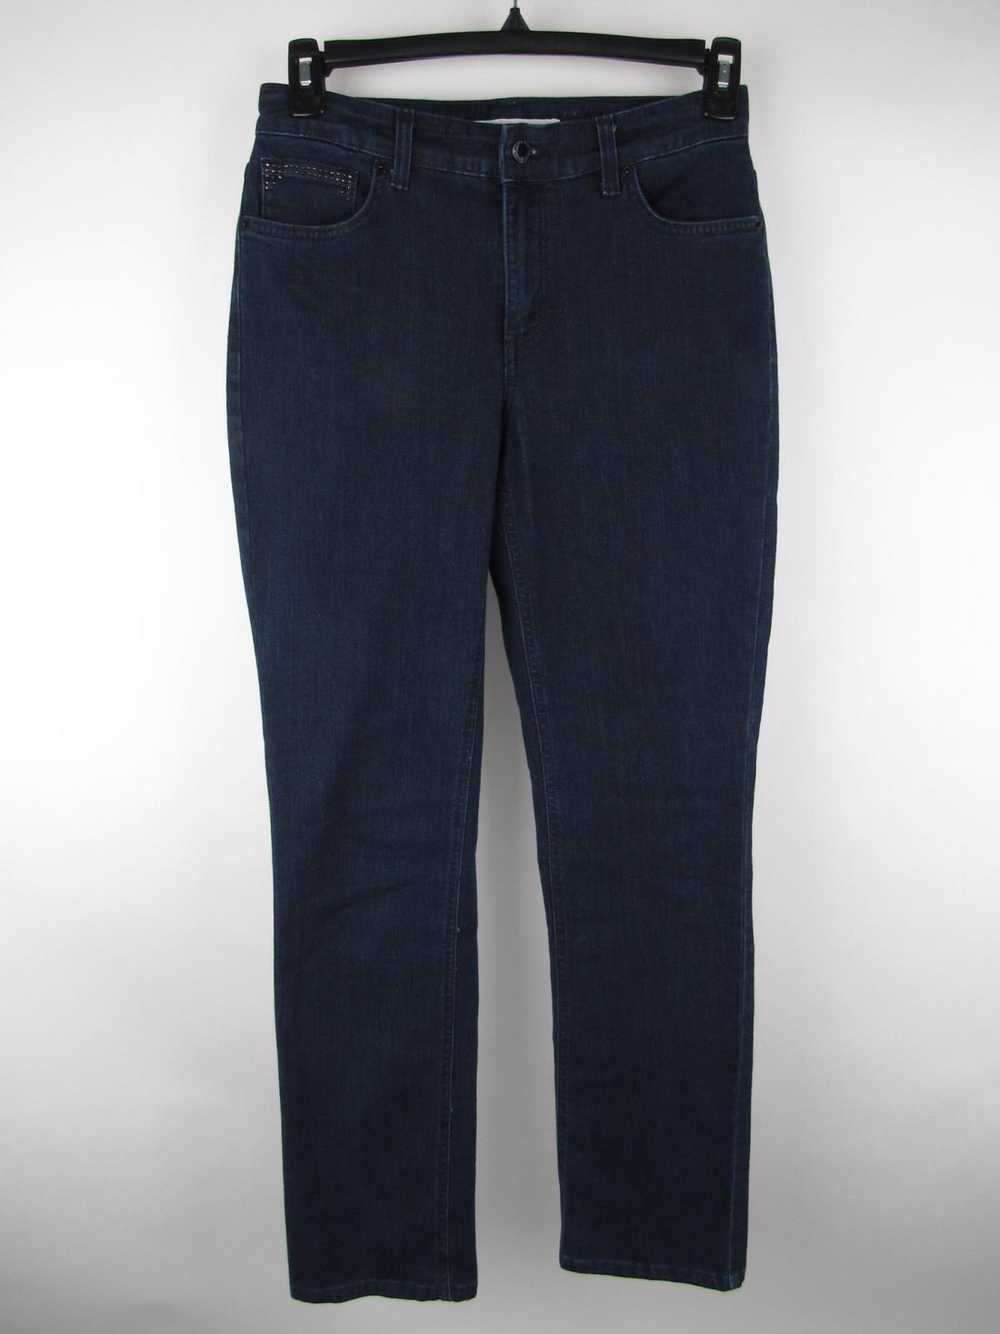 Jones New York Jeans Straight Jeans - image 1